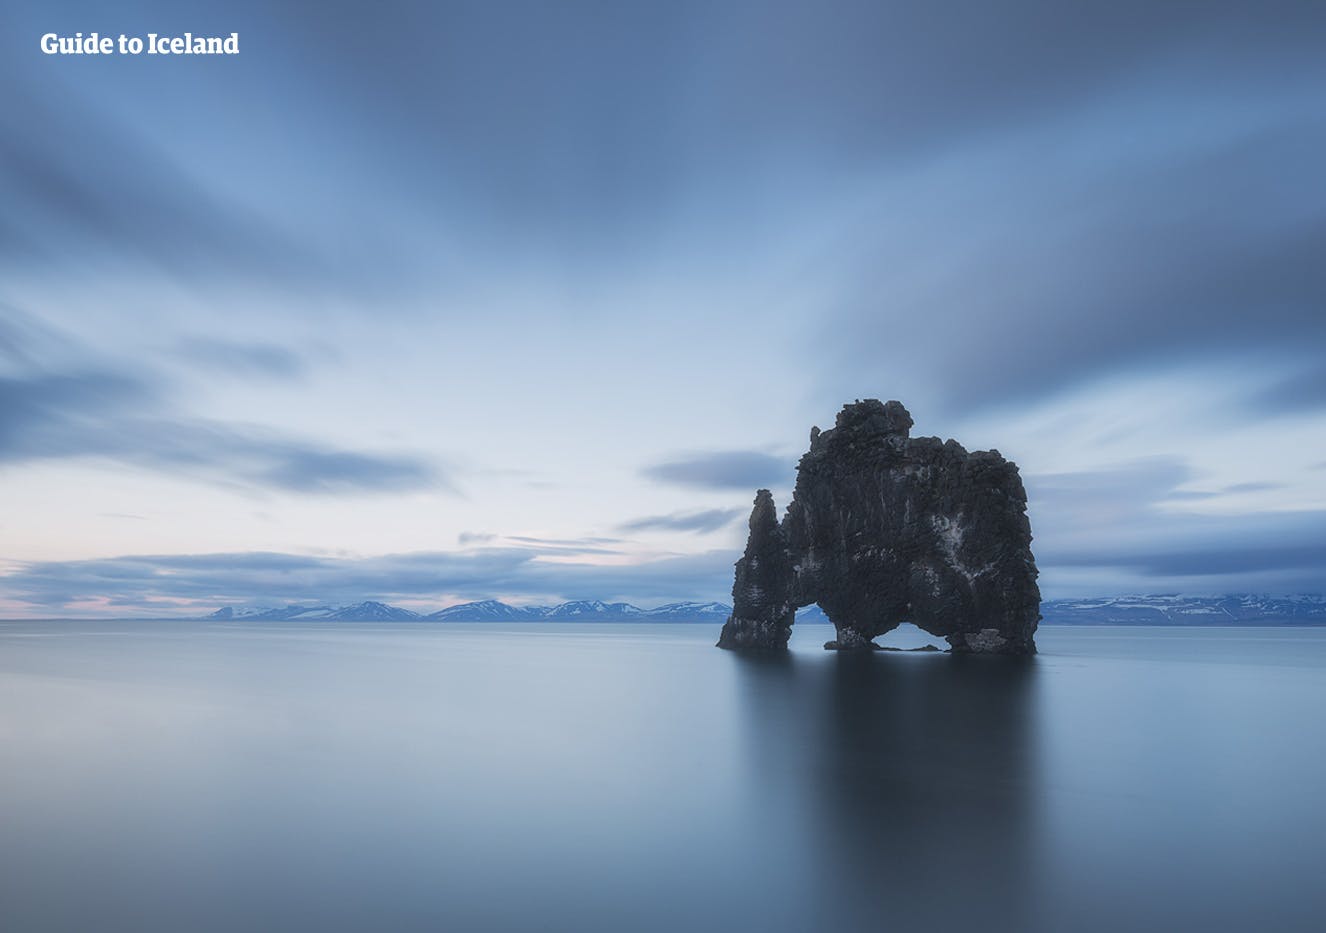 Den storslåede stenmonolit Hvítserkur i det nordlige Island.